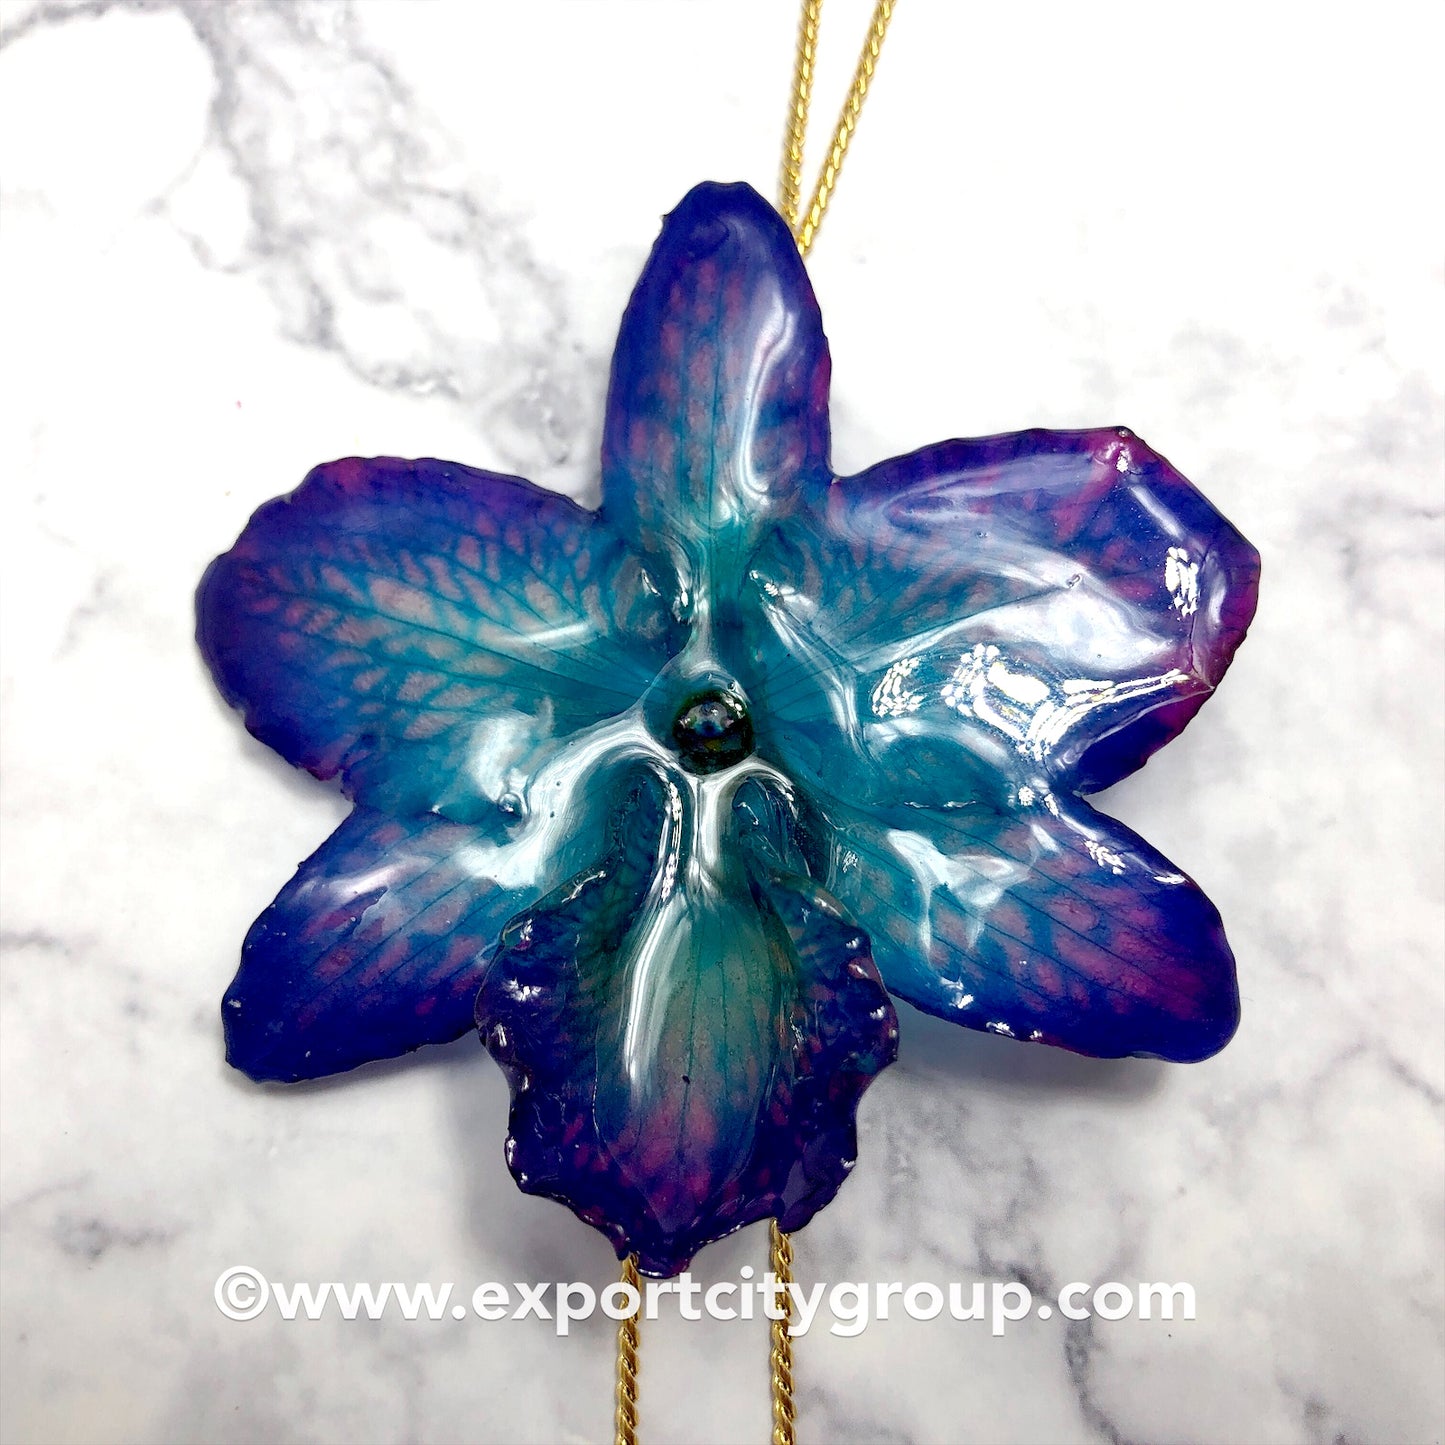 Nobile "Dendrobium" Orchid Jewelry Necklace Slider (Purple Blue)